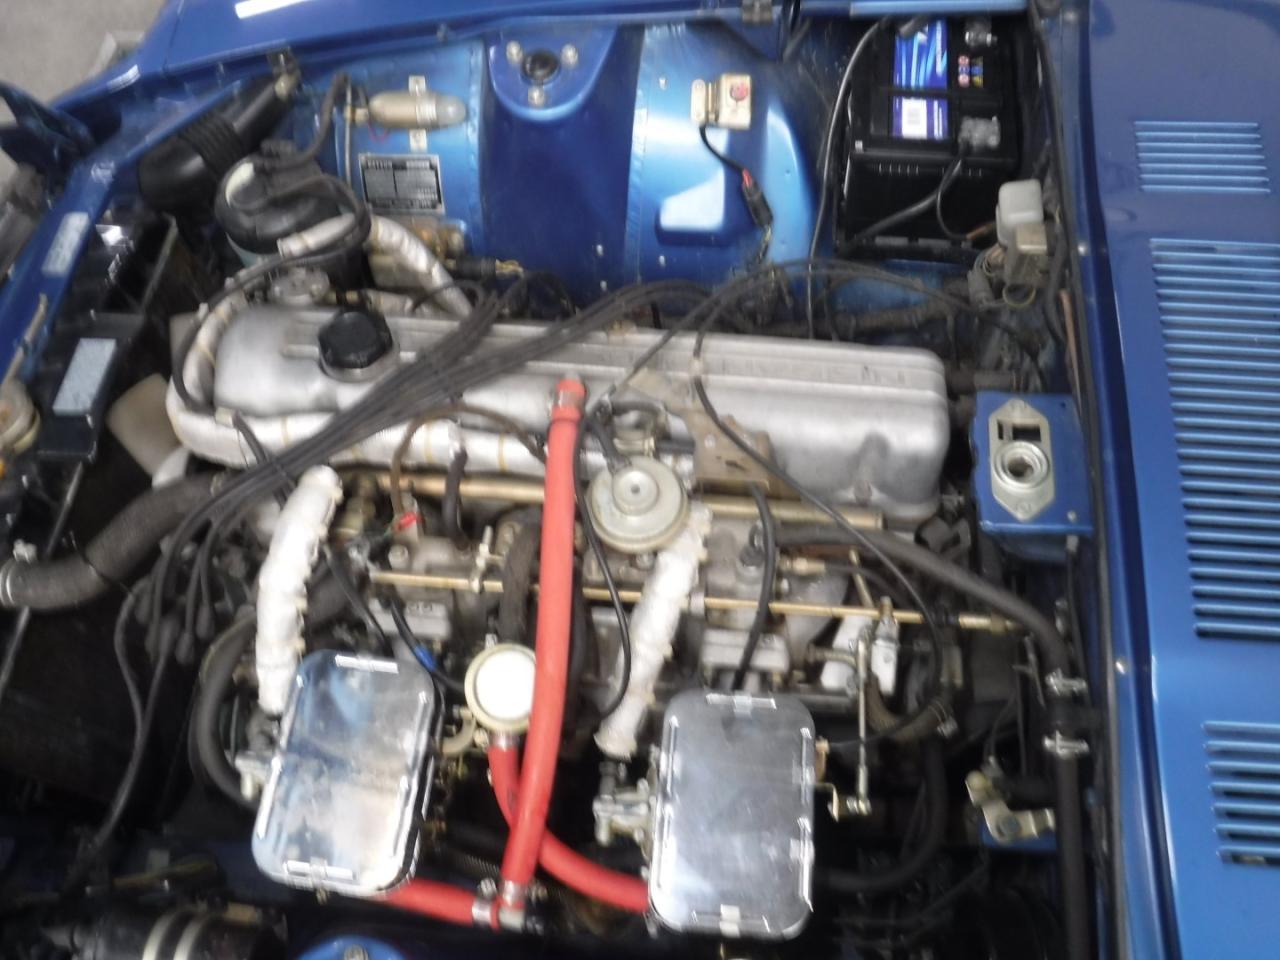 1974 Datsun 260Z blue